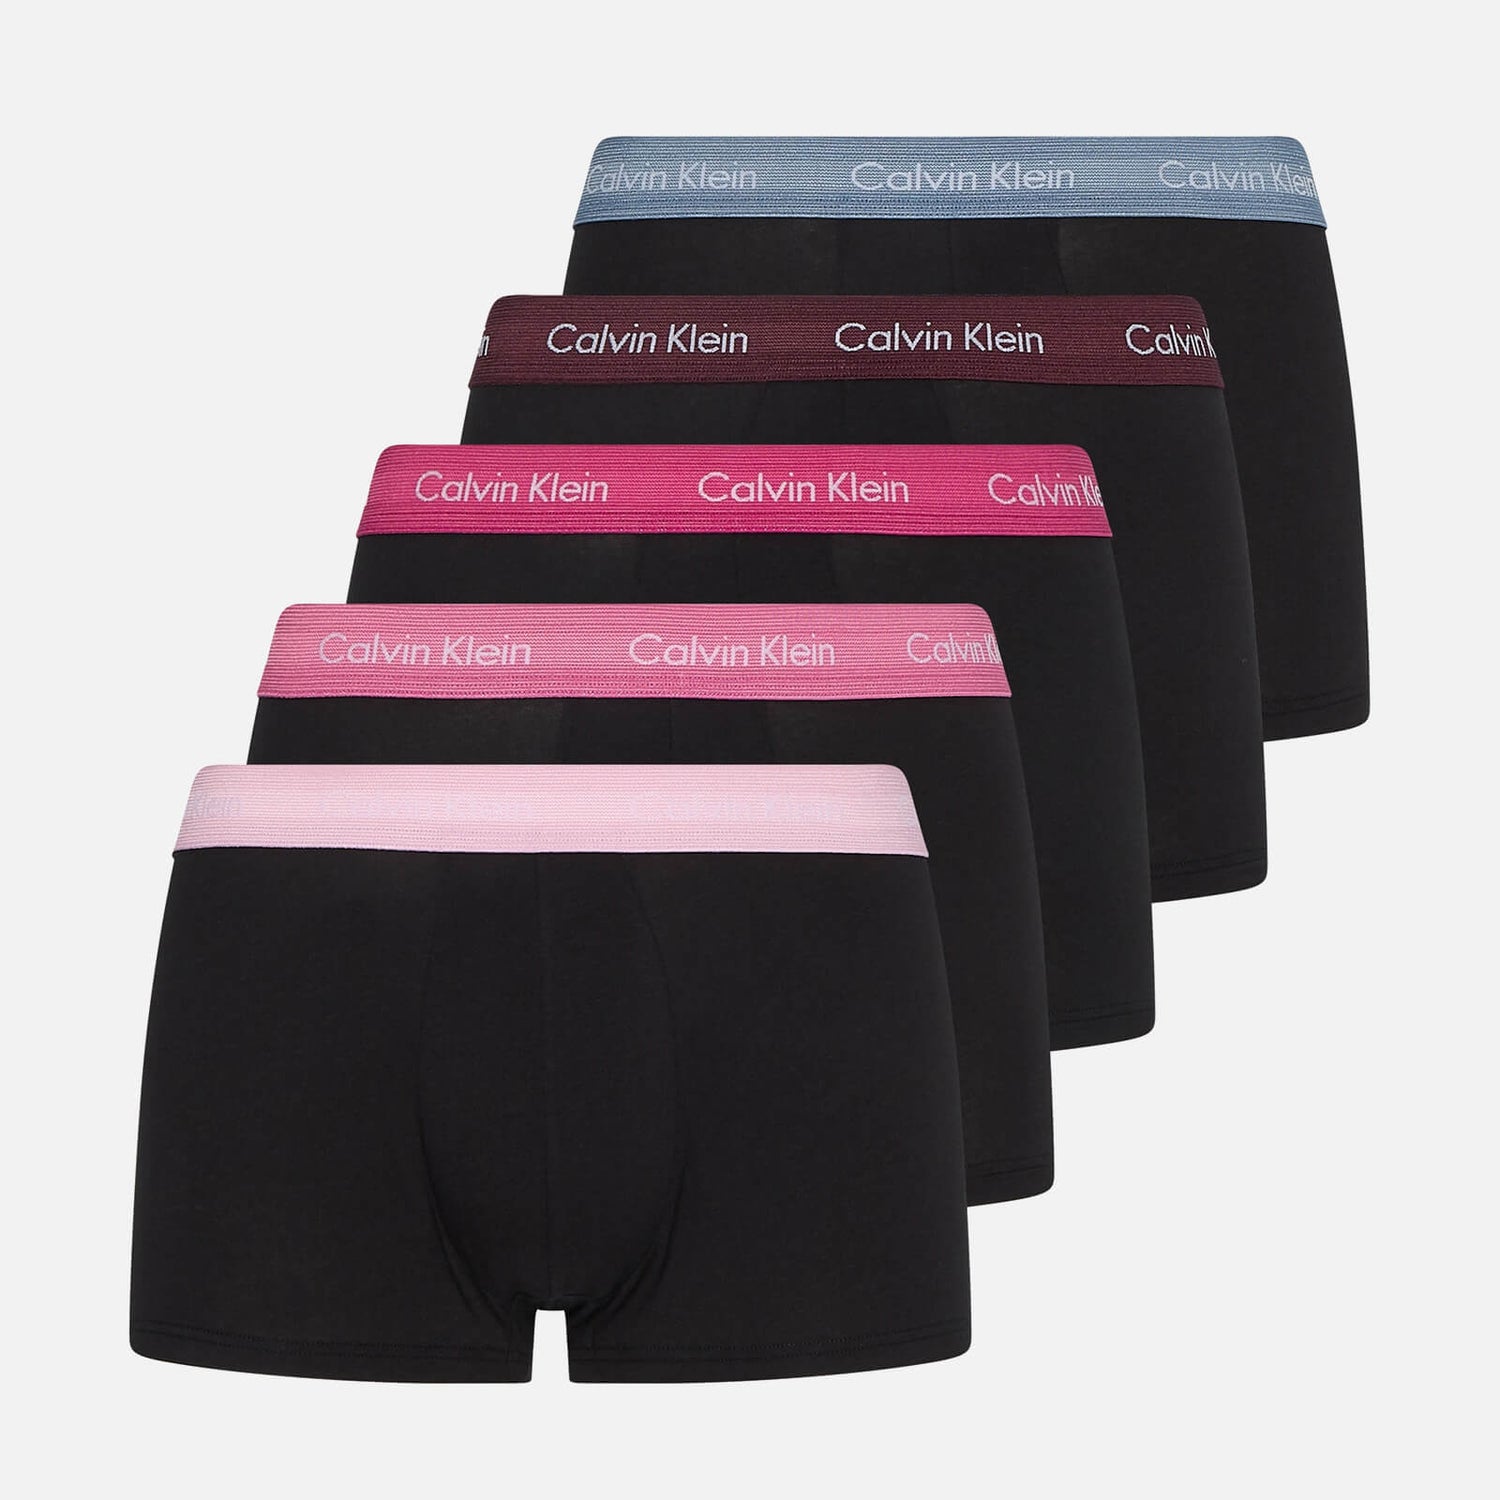 Calvin Klein Men's 5 Pack Low Rise Trunk Boxer Shorts - Black/Multi ...